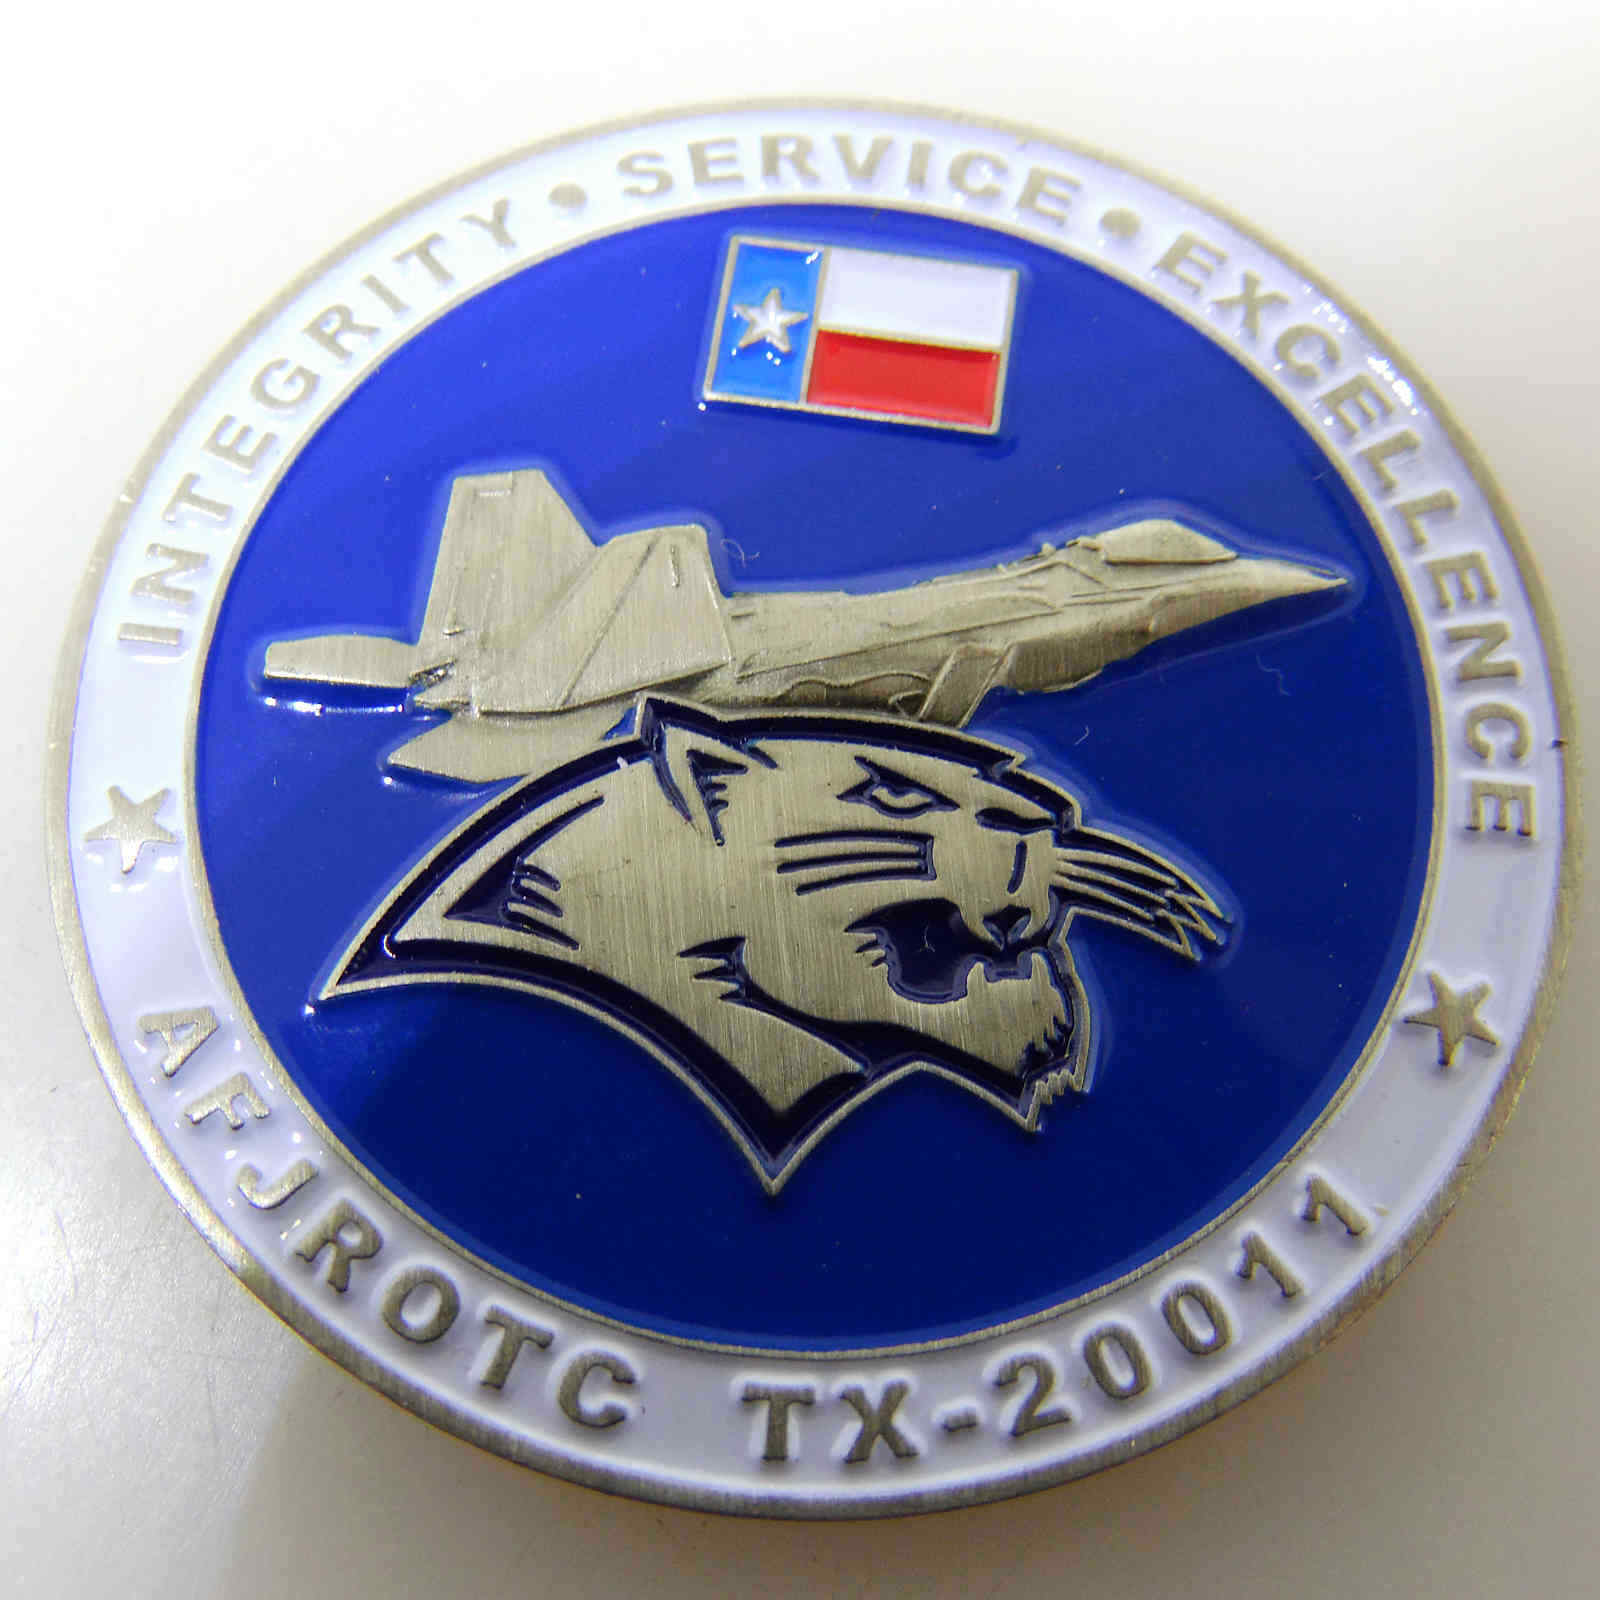 TEXAS FLOWER MOUND HIGH SCHOOL AFJROTC TX-20011 CHALLENGE COIN